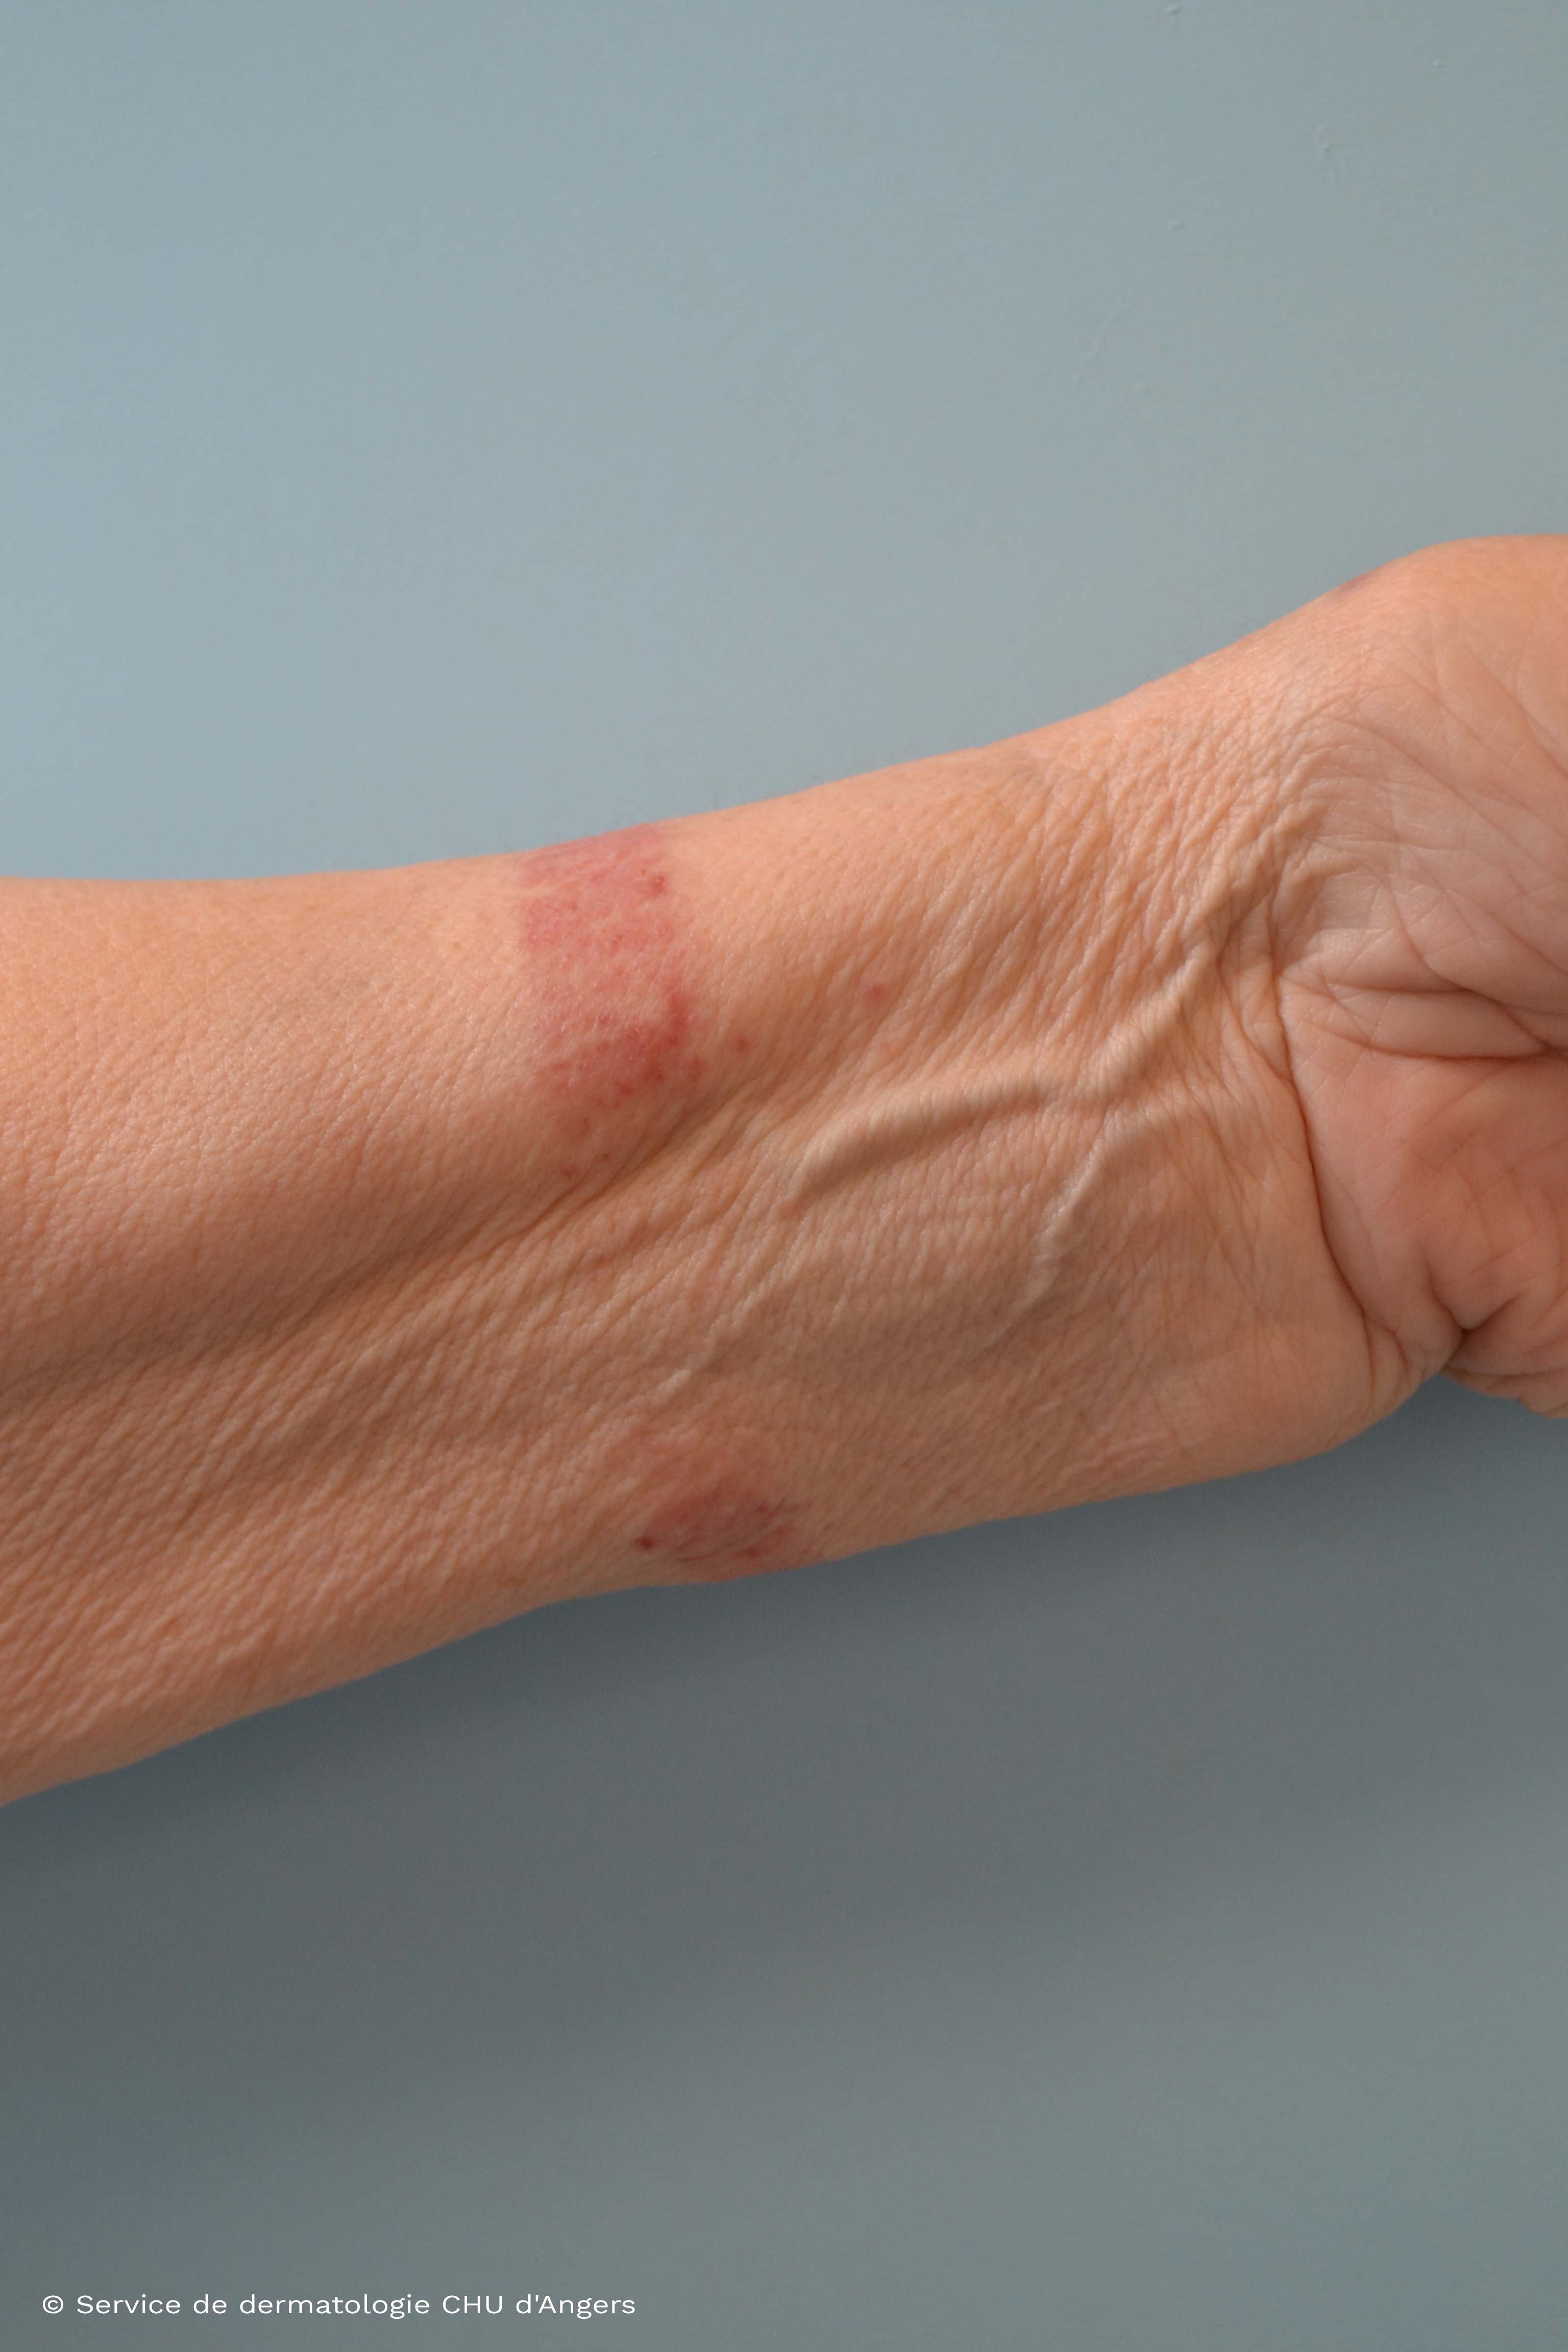 Contact eczema nickel watchband